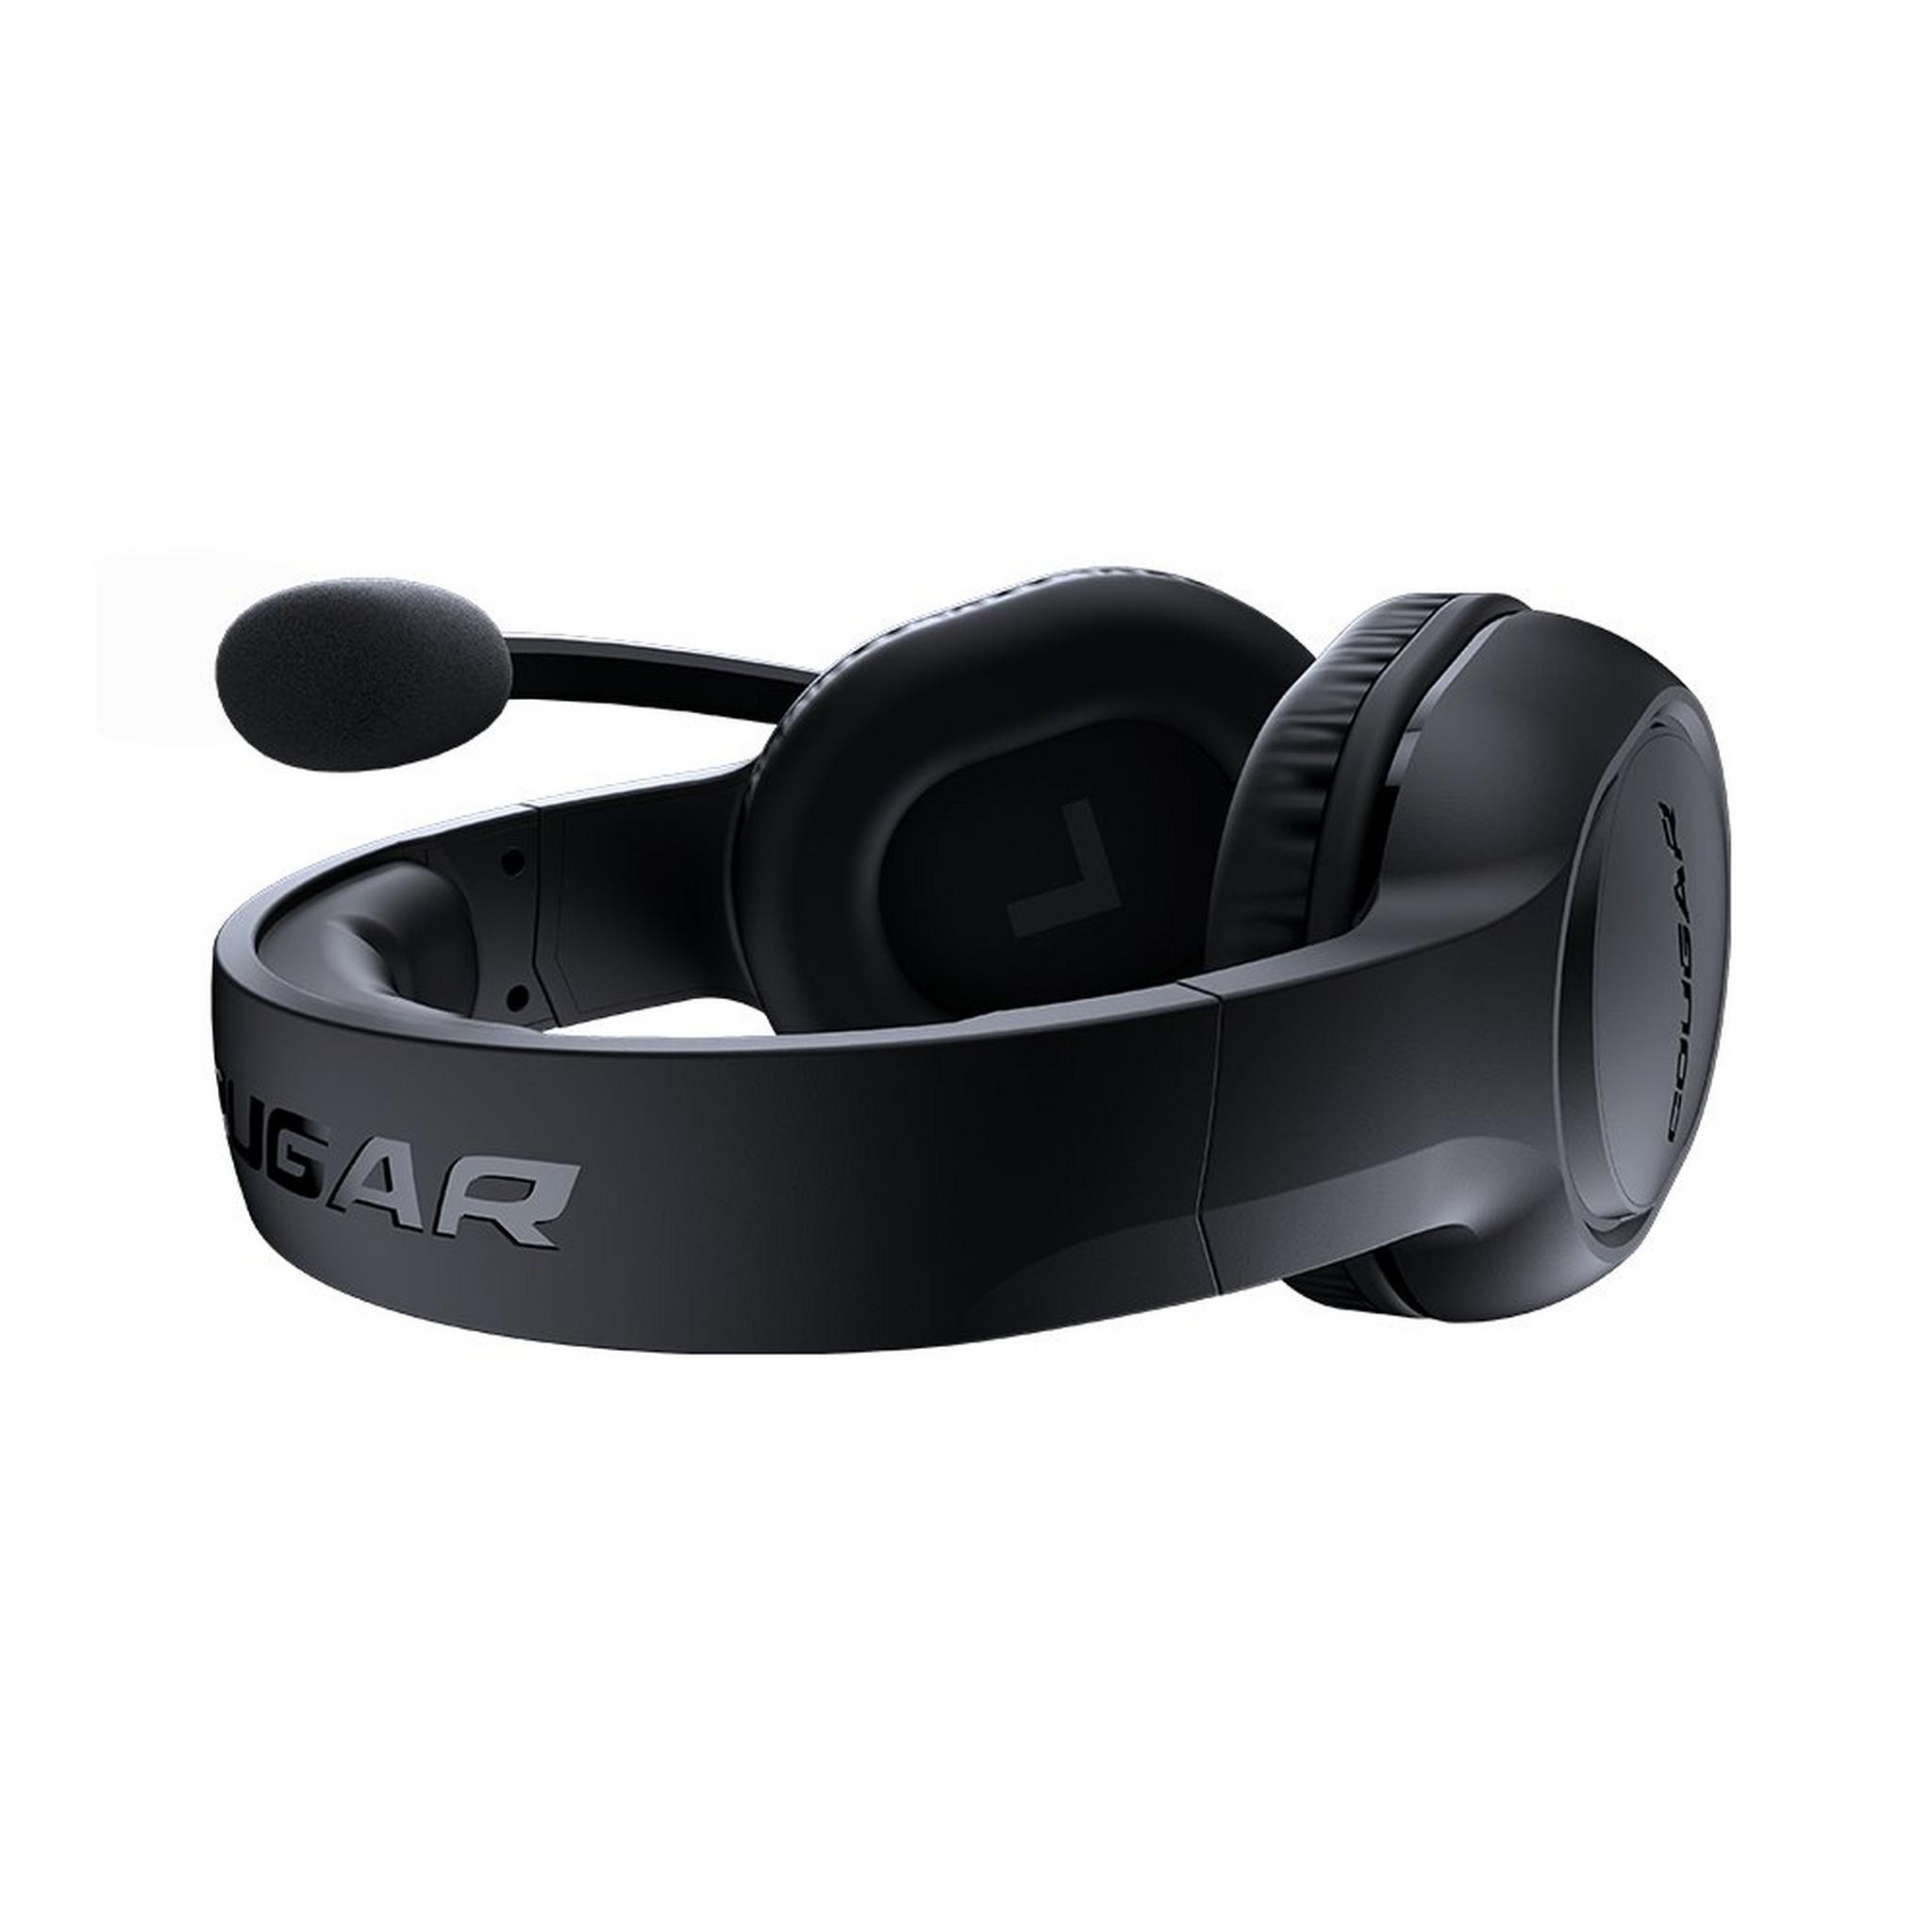 COUGAR HX330 Wired Gaming Headset, 3H250P50B.0001– Black